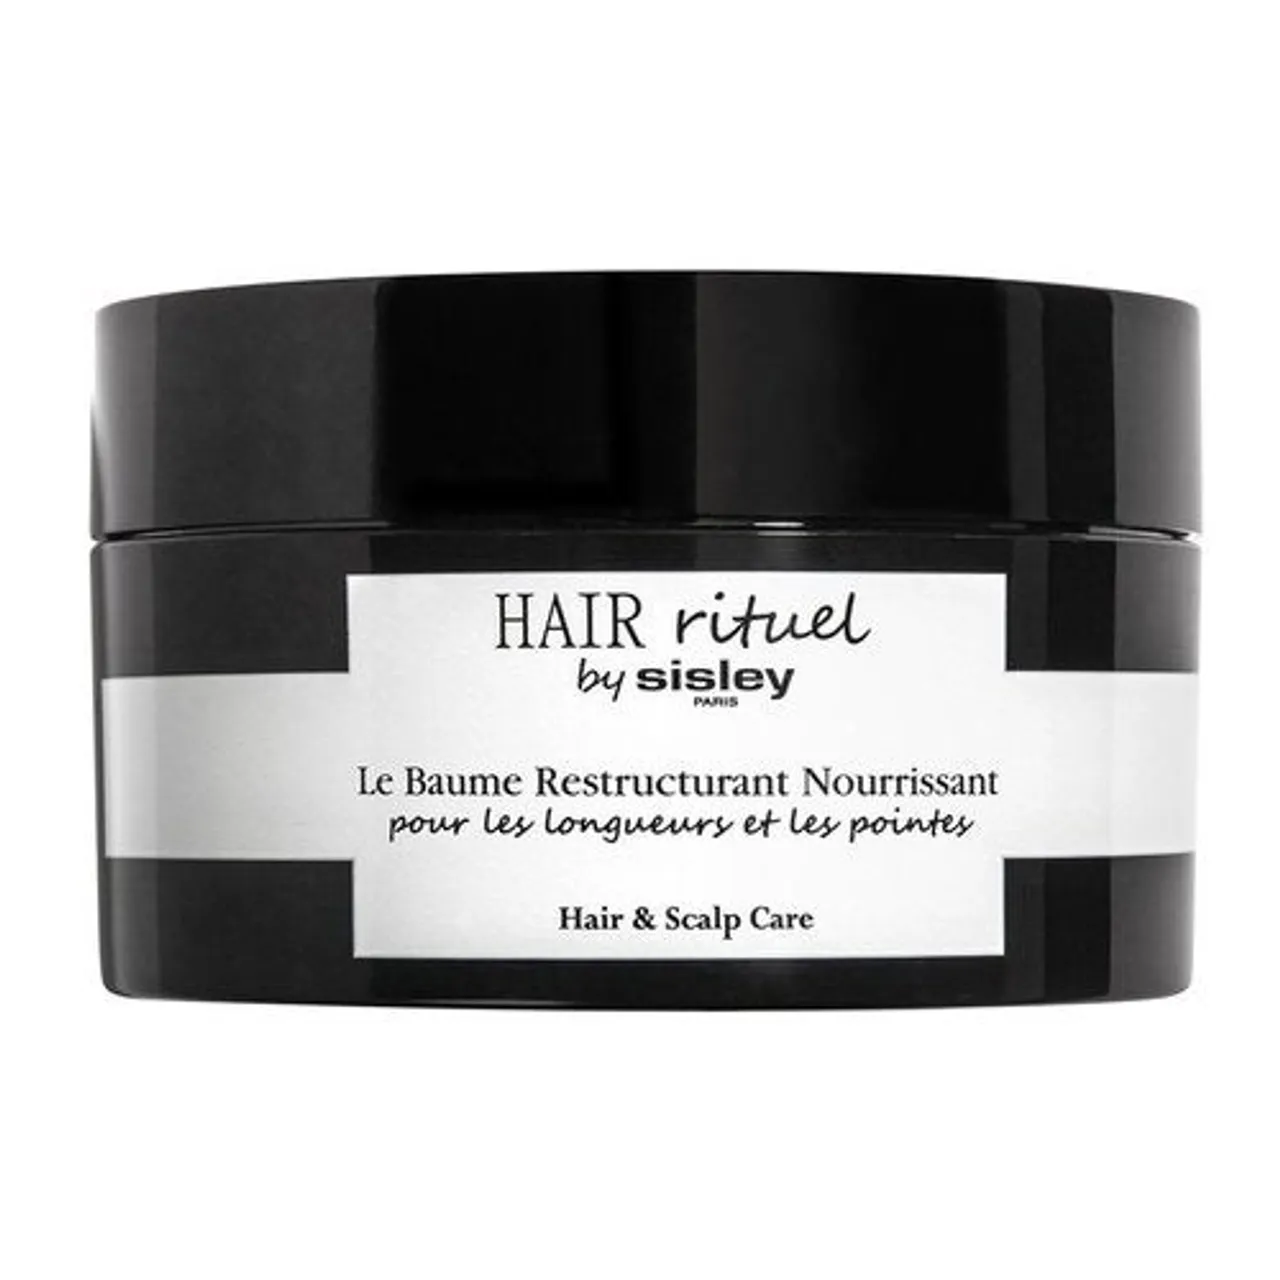 Sisley Hair Rituel Restructuring Nourishing Balm 125 gram